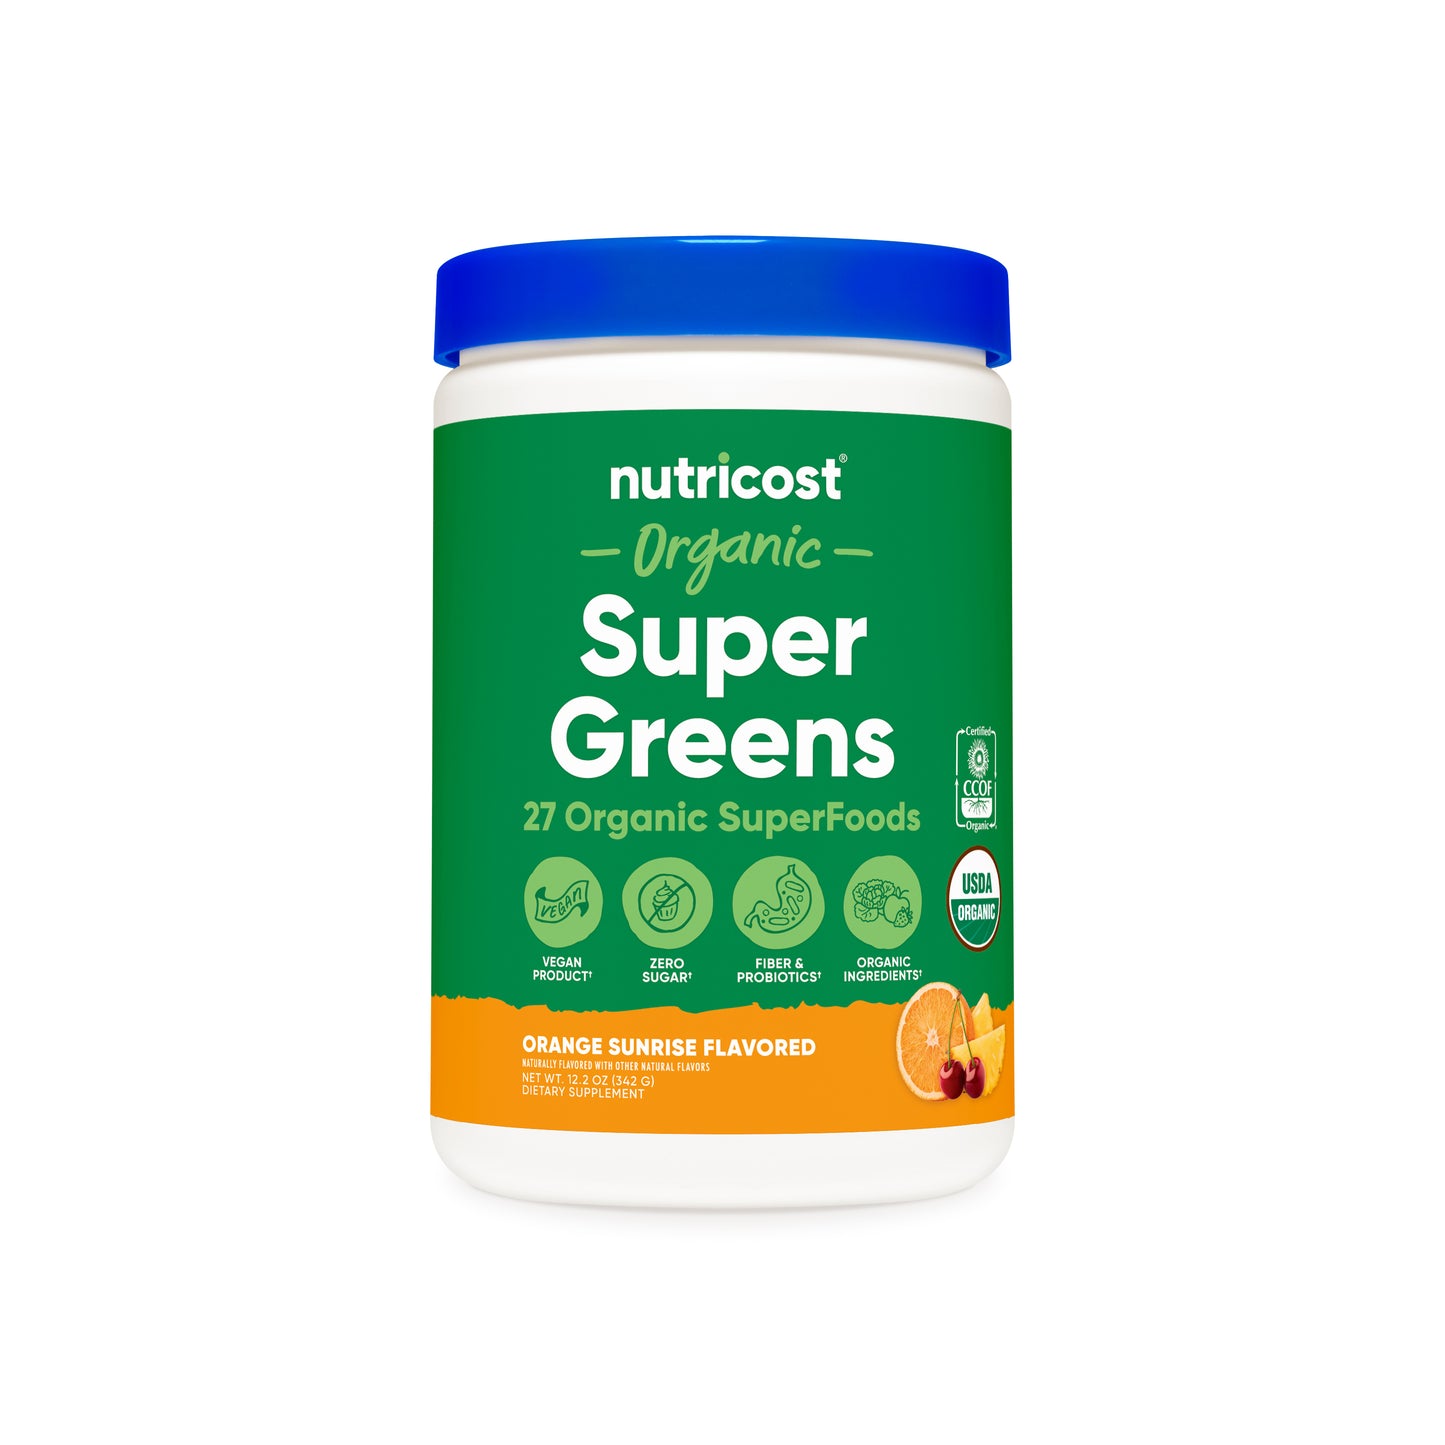 Nutricost Organic Greens